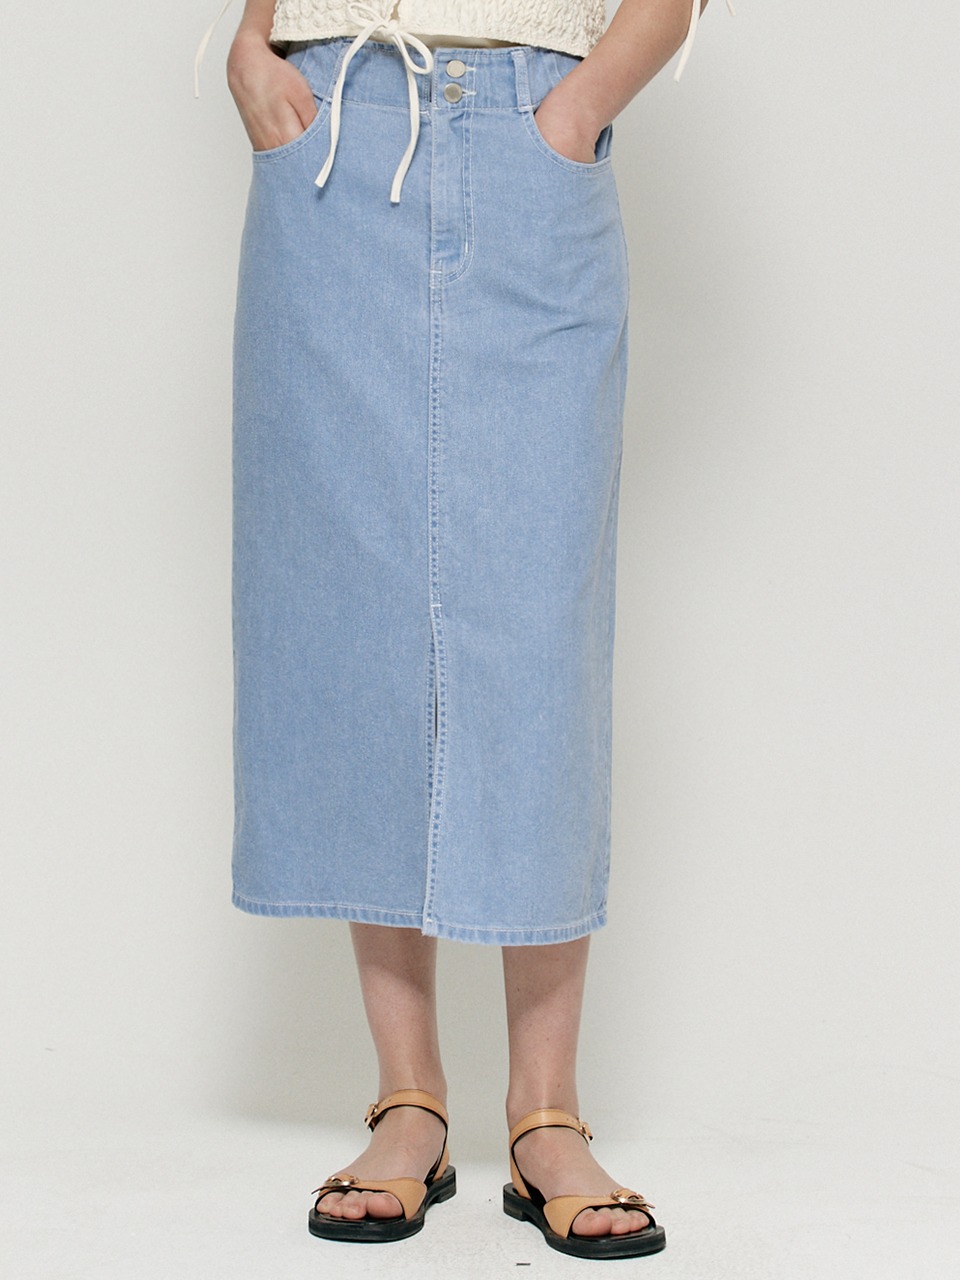 [REFURB SALE] Front slit stitch denim skirt - Aqua blue